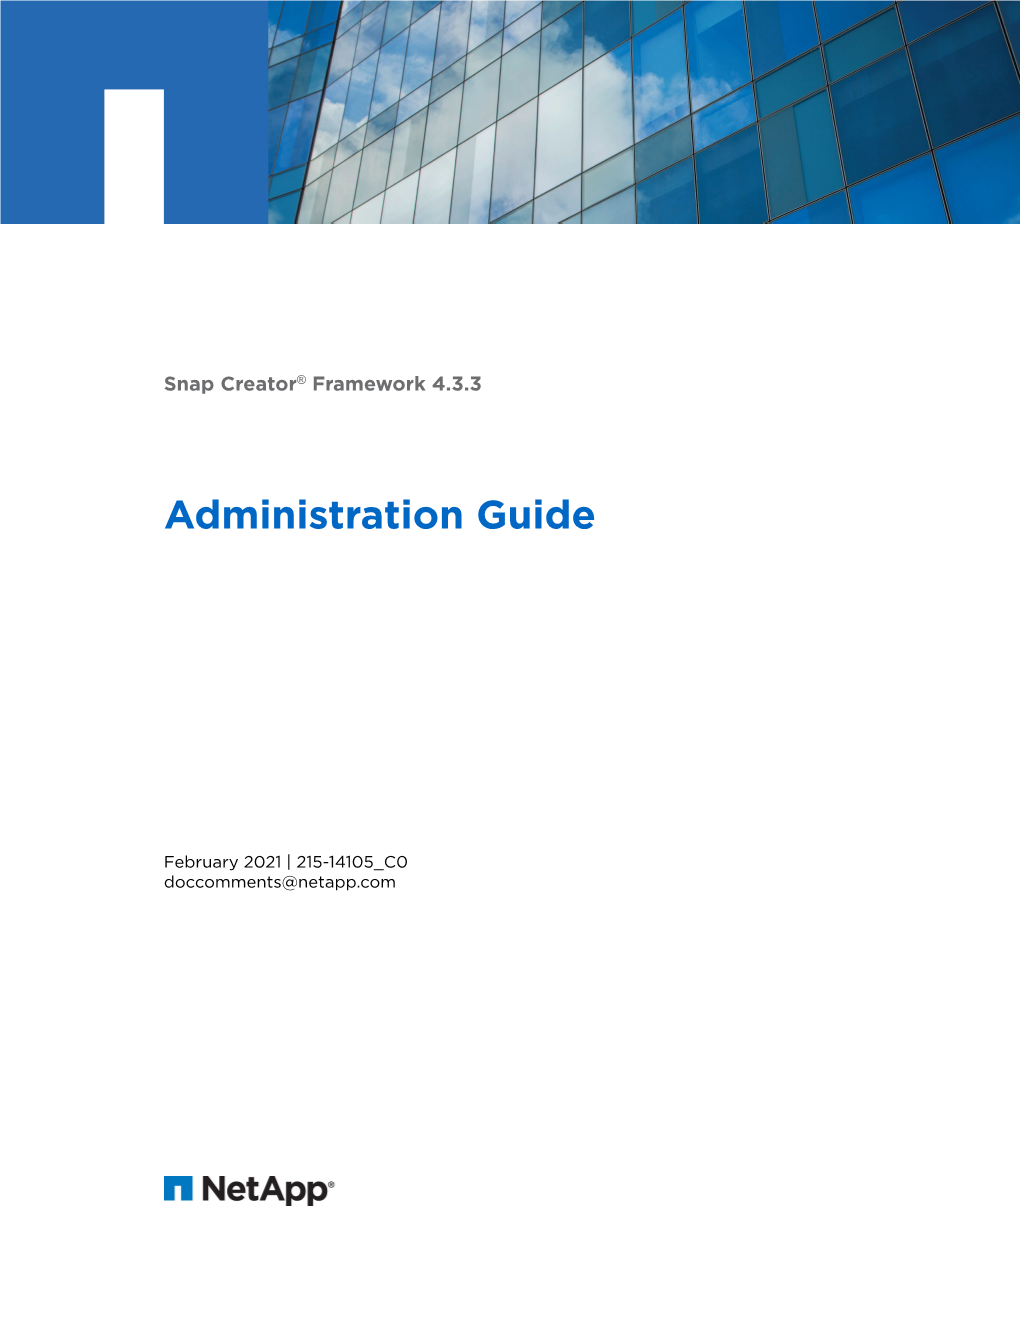 Snap Creator Framework 4.3.3 Administration Guide